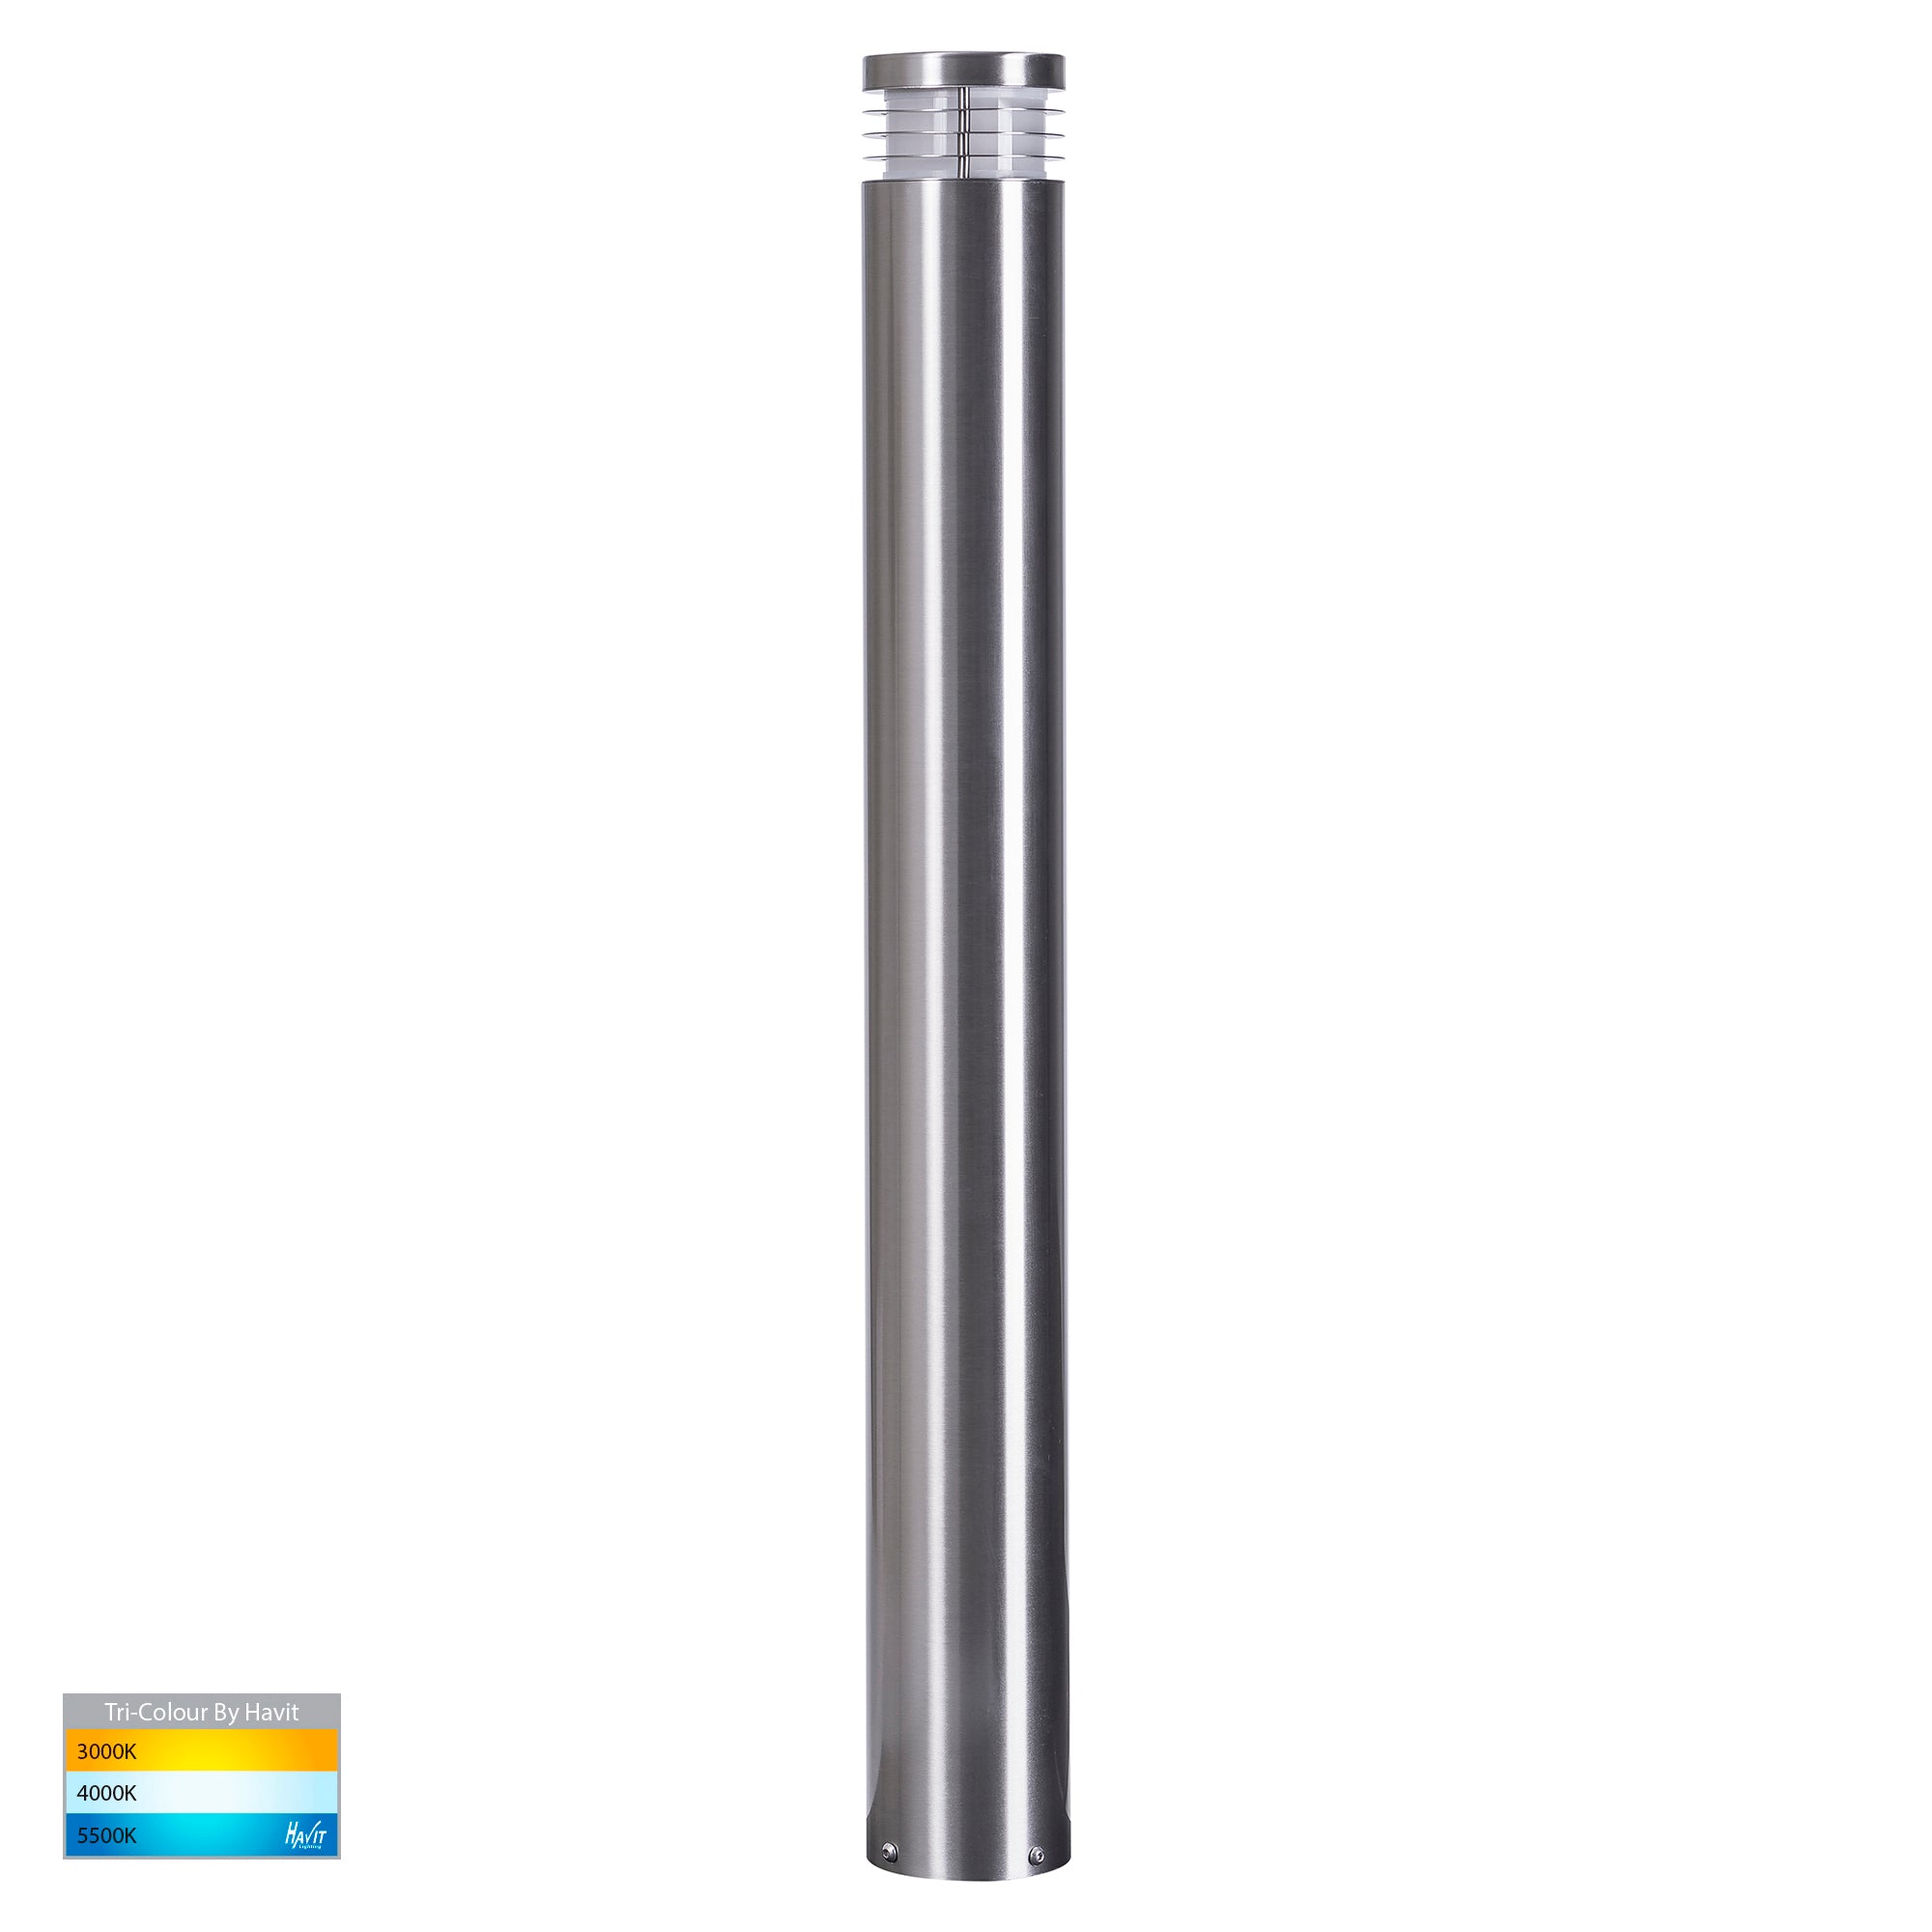 HV1608T-SS316 -Maxi 900 316 Stainless Steel TRI Colour LED Bollard Light